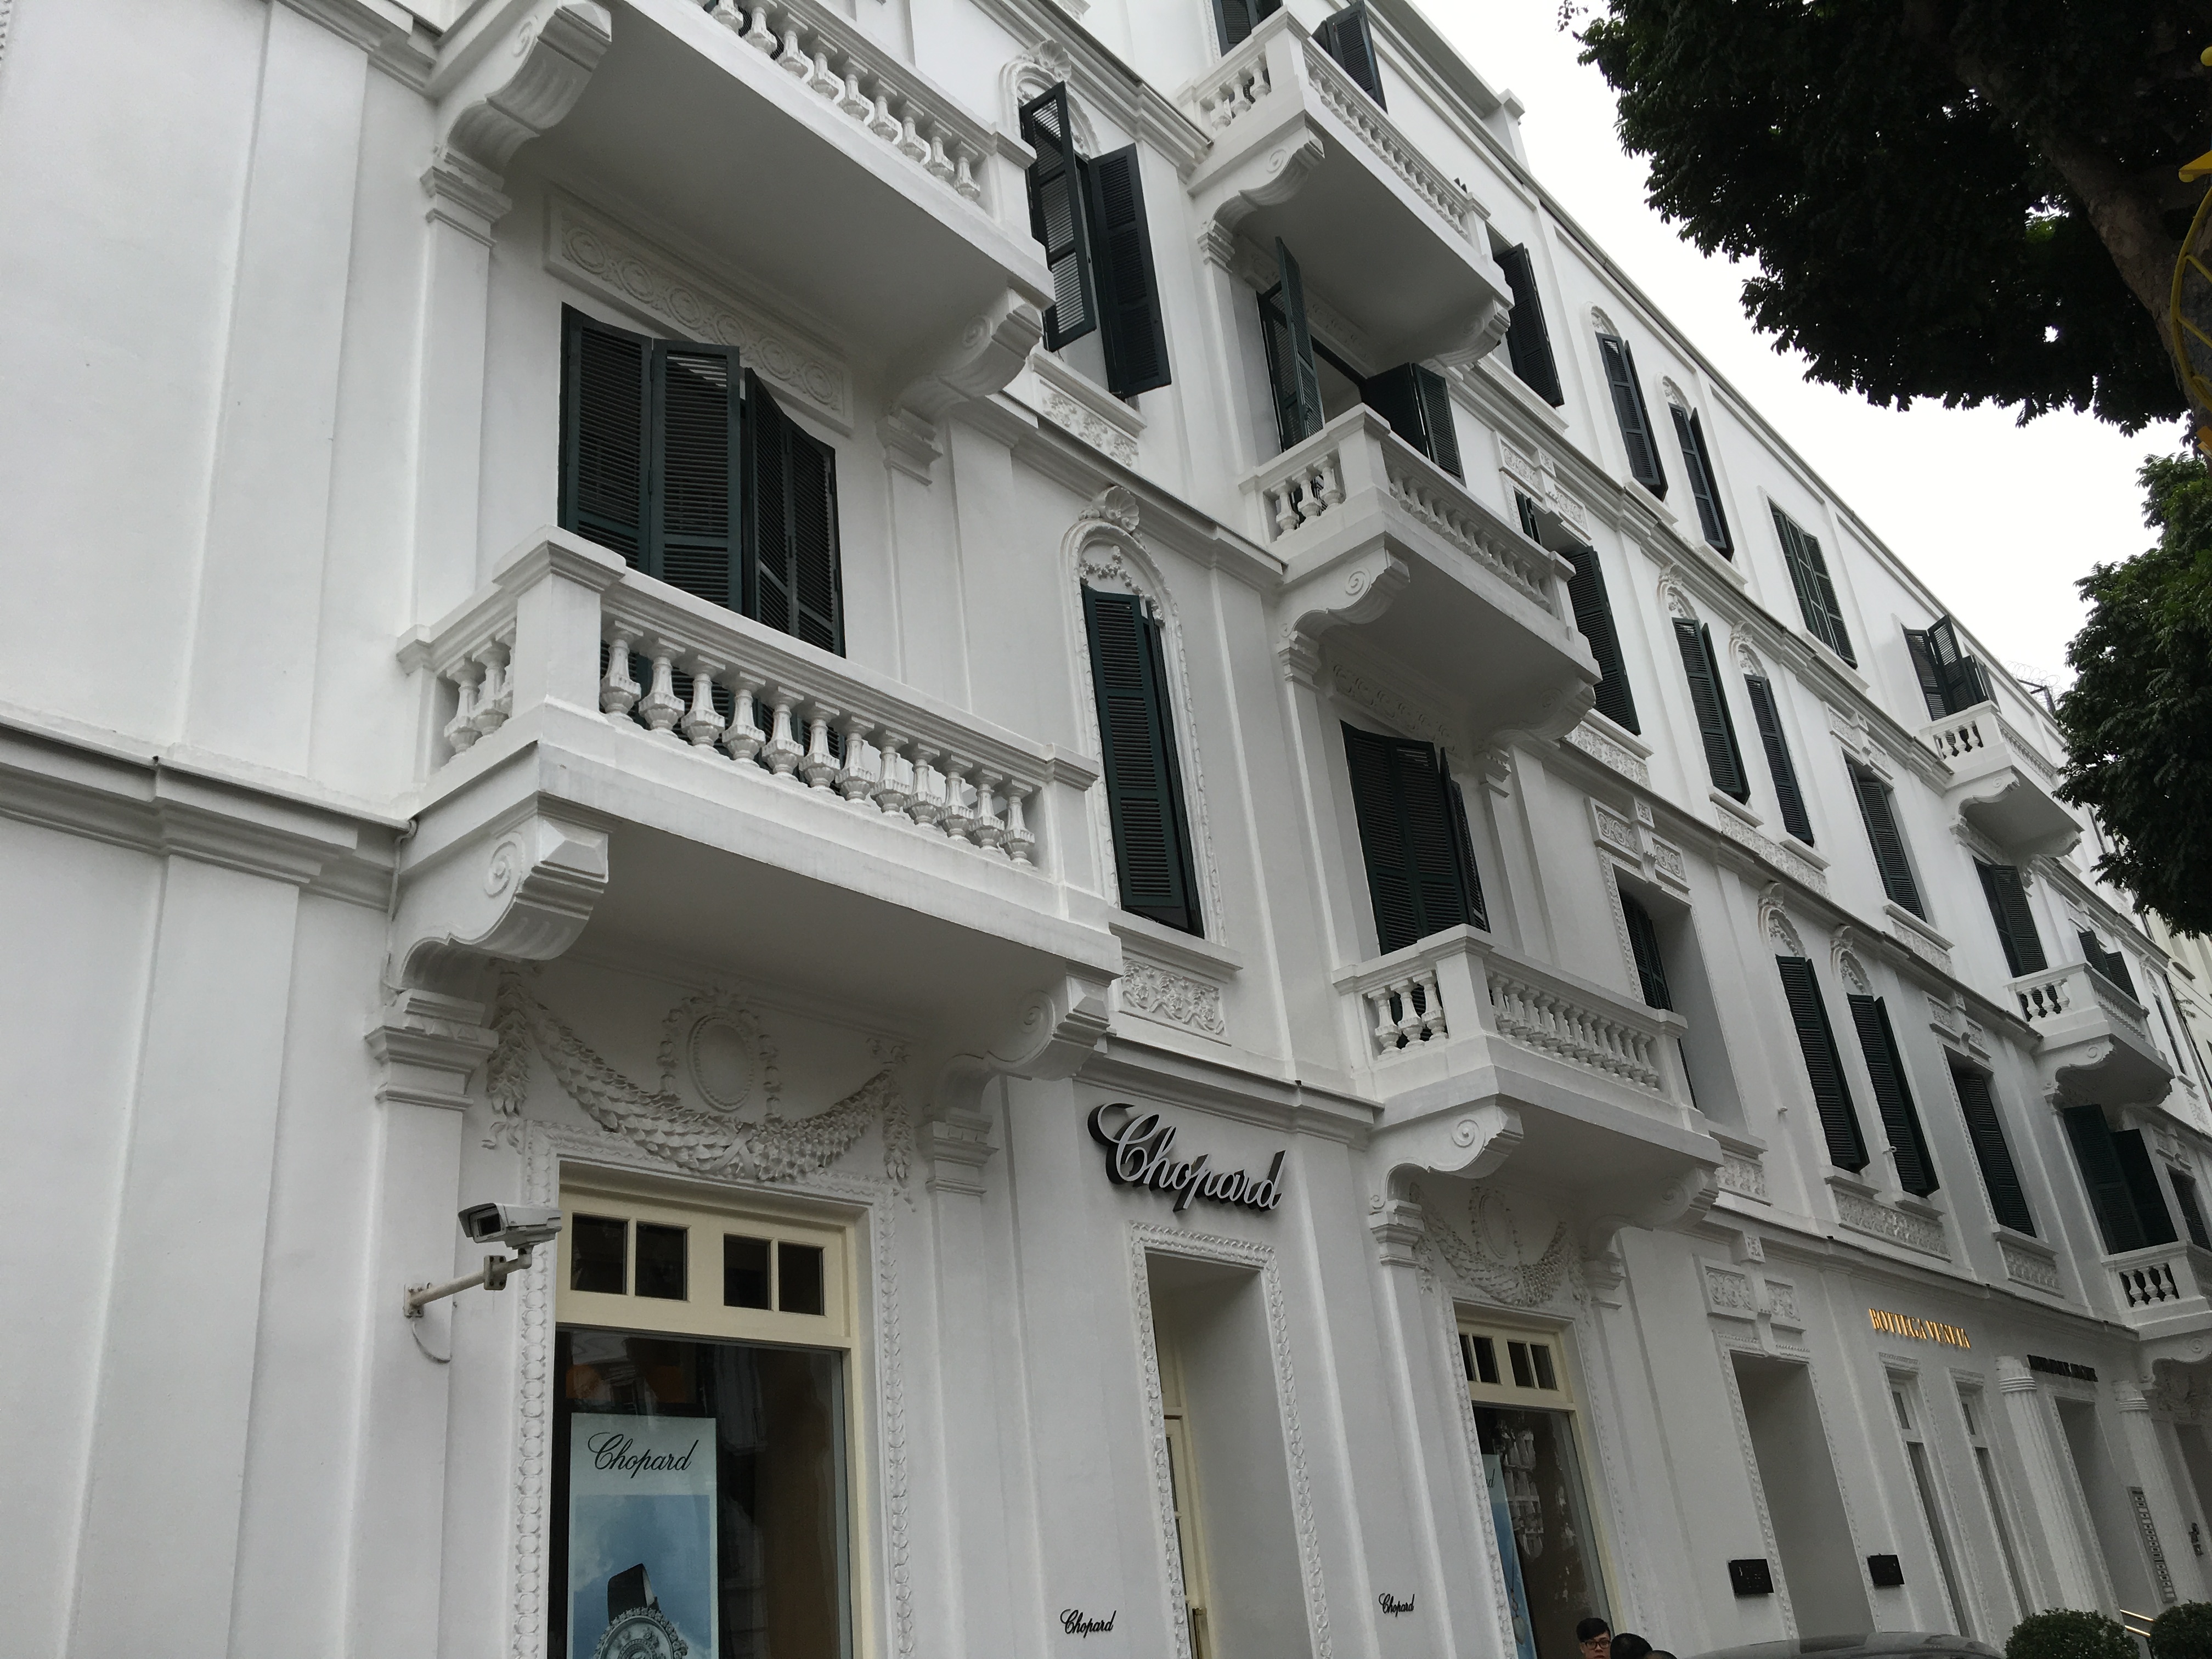 boutique hotel - Picture of Sofitel Legend Metropole Hanoi - Tripadvisor